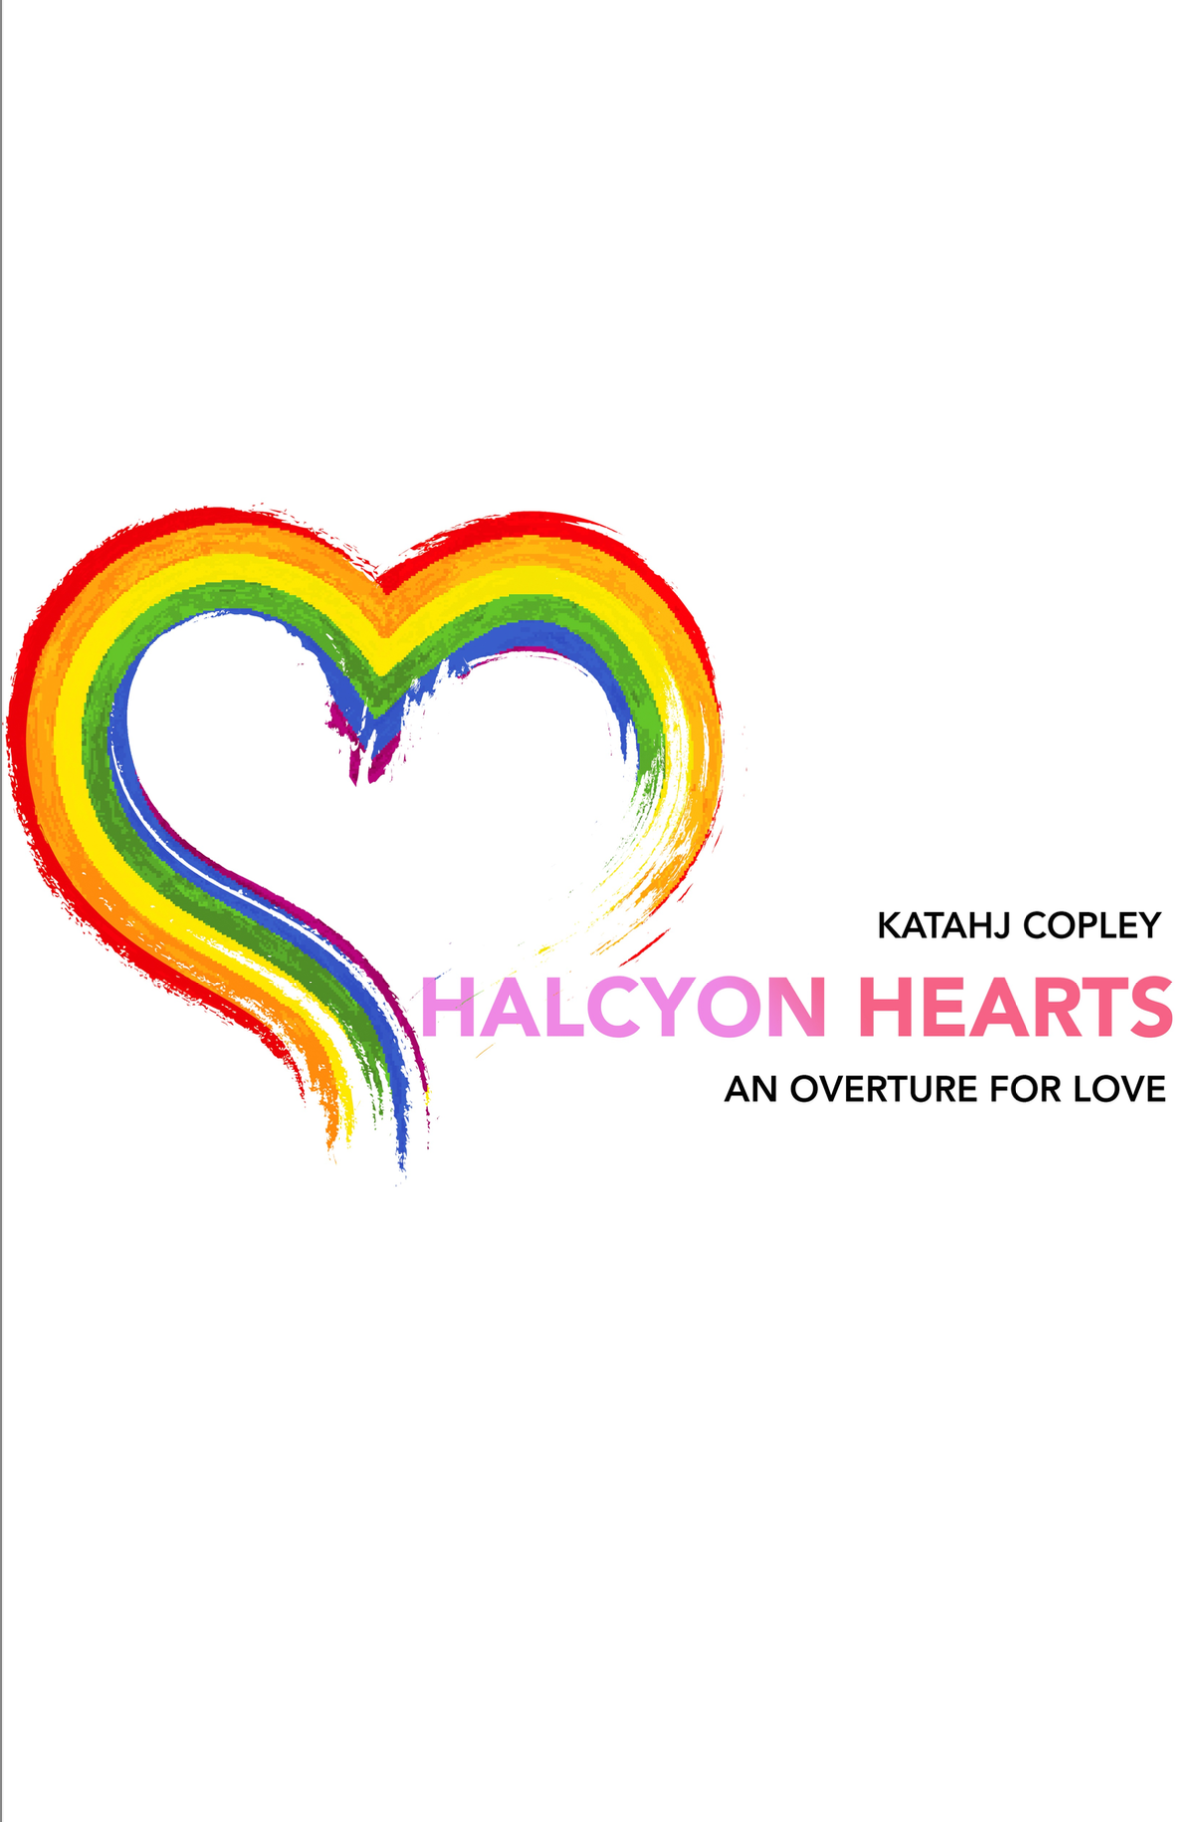 Halcyon Hearts by Katahj Copley